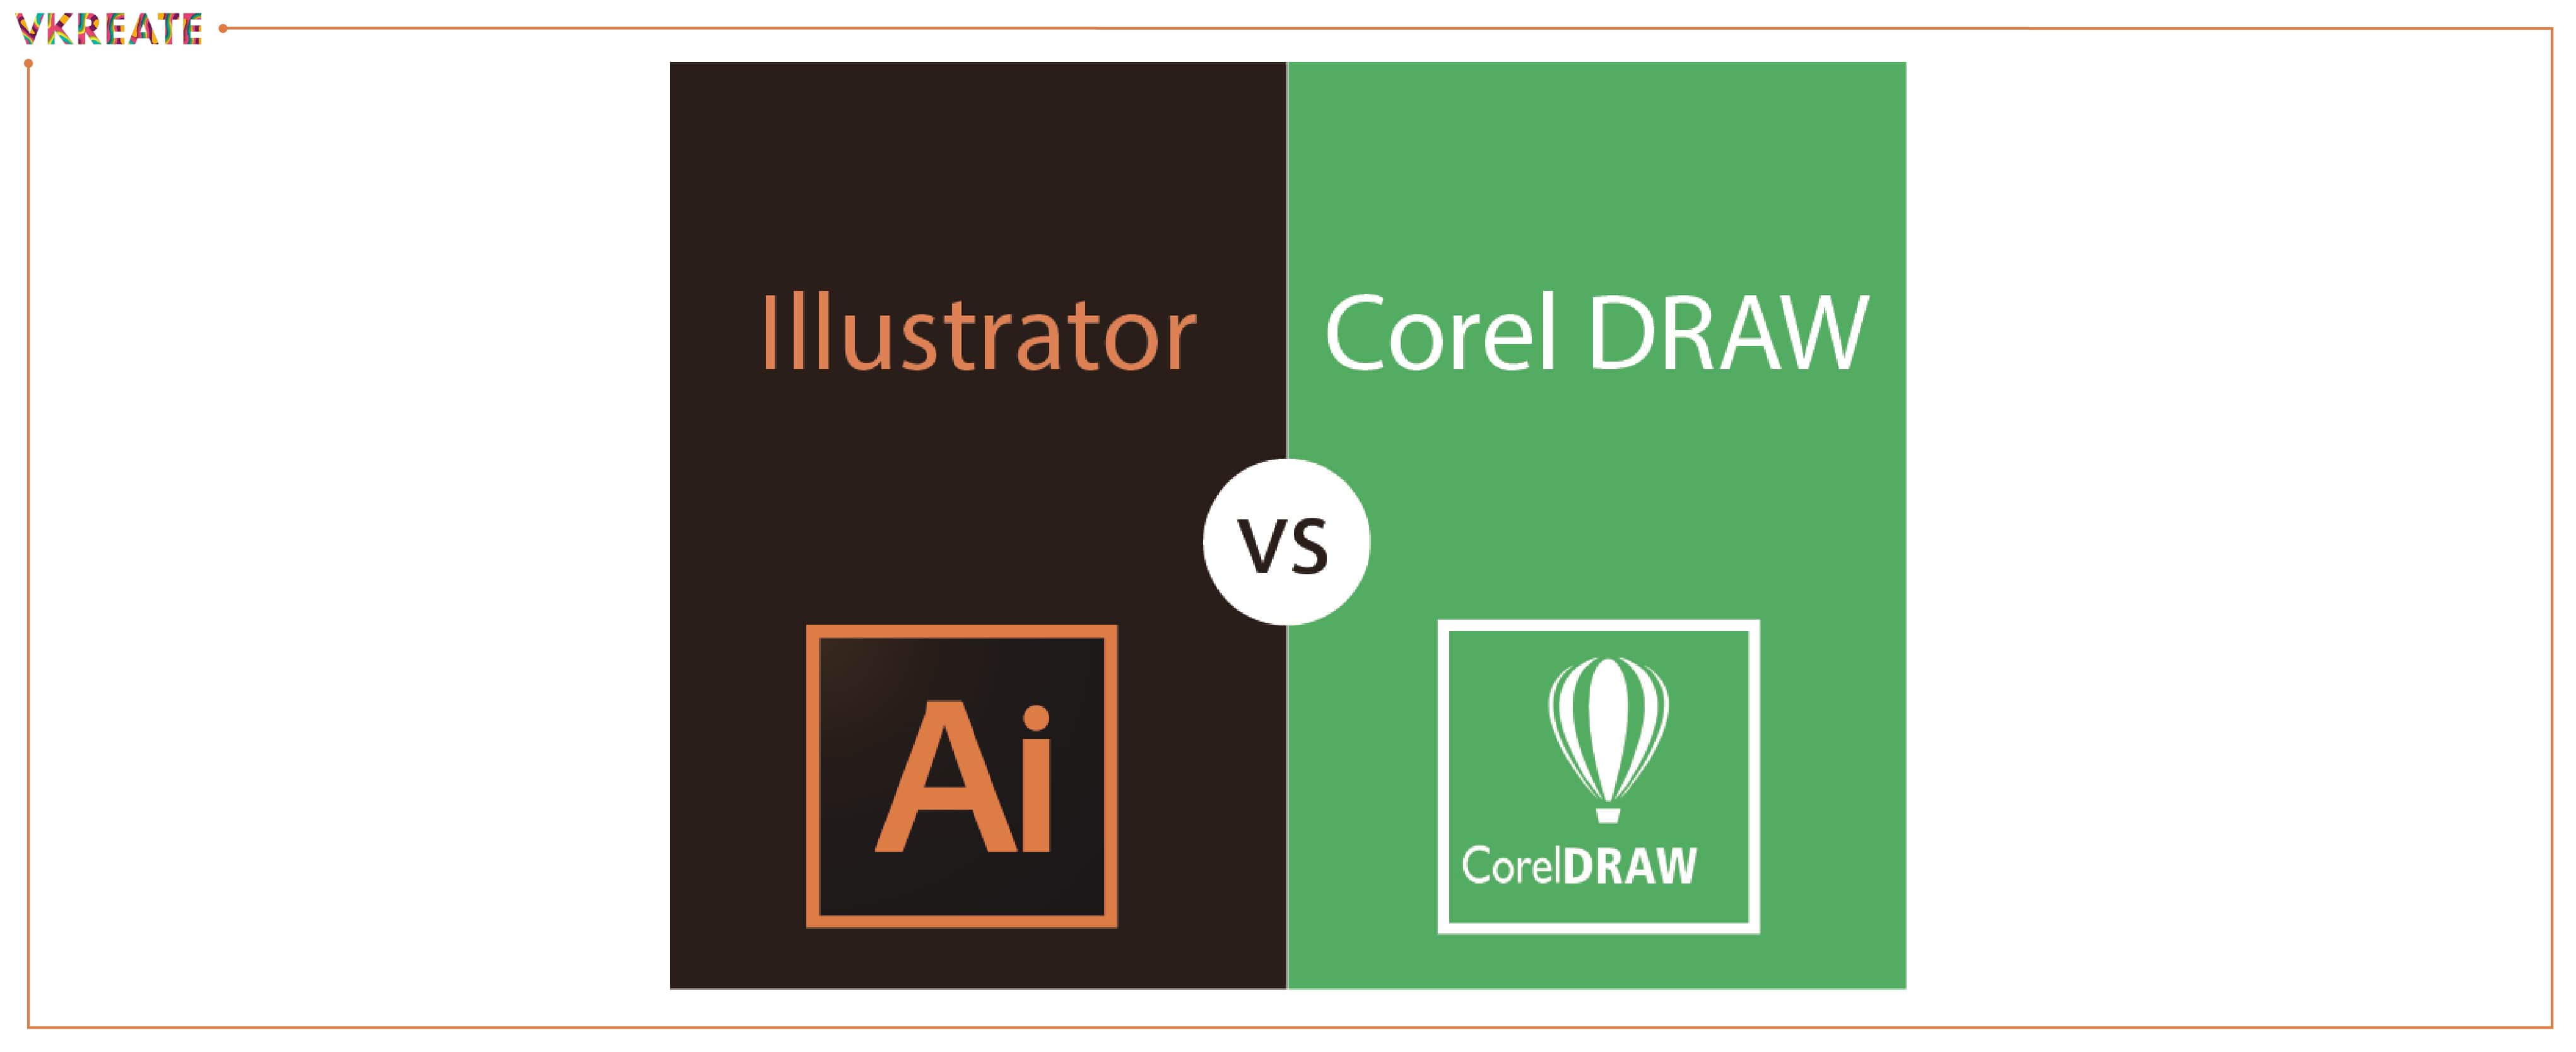 CorelDraw Vs Adobe Illustrator: Which is better in 2020?